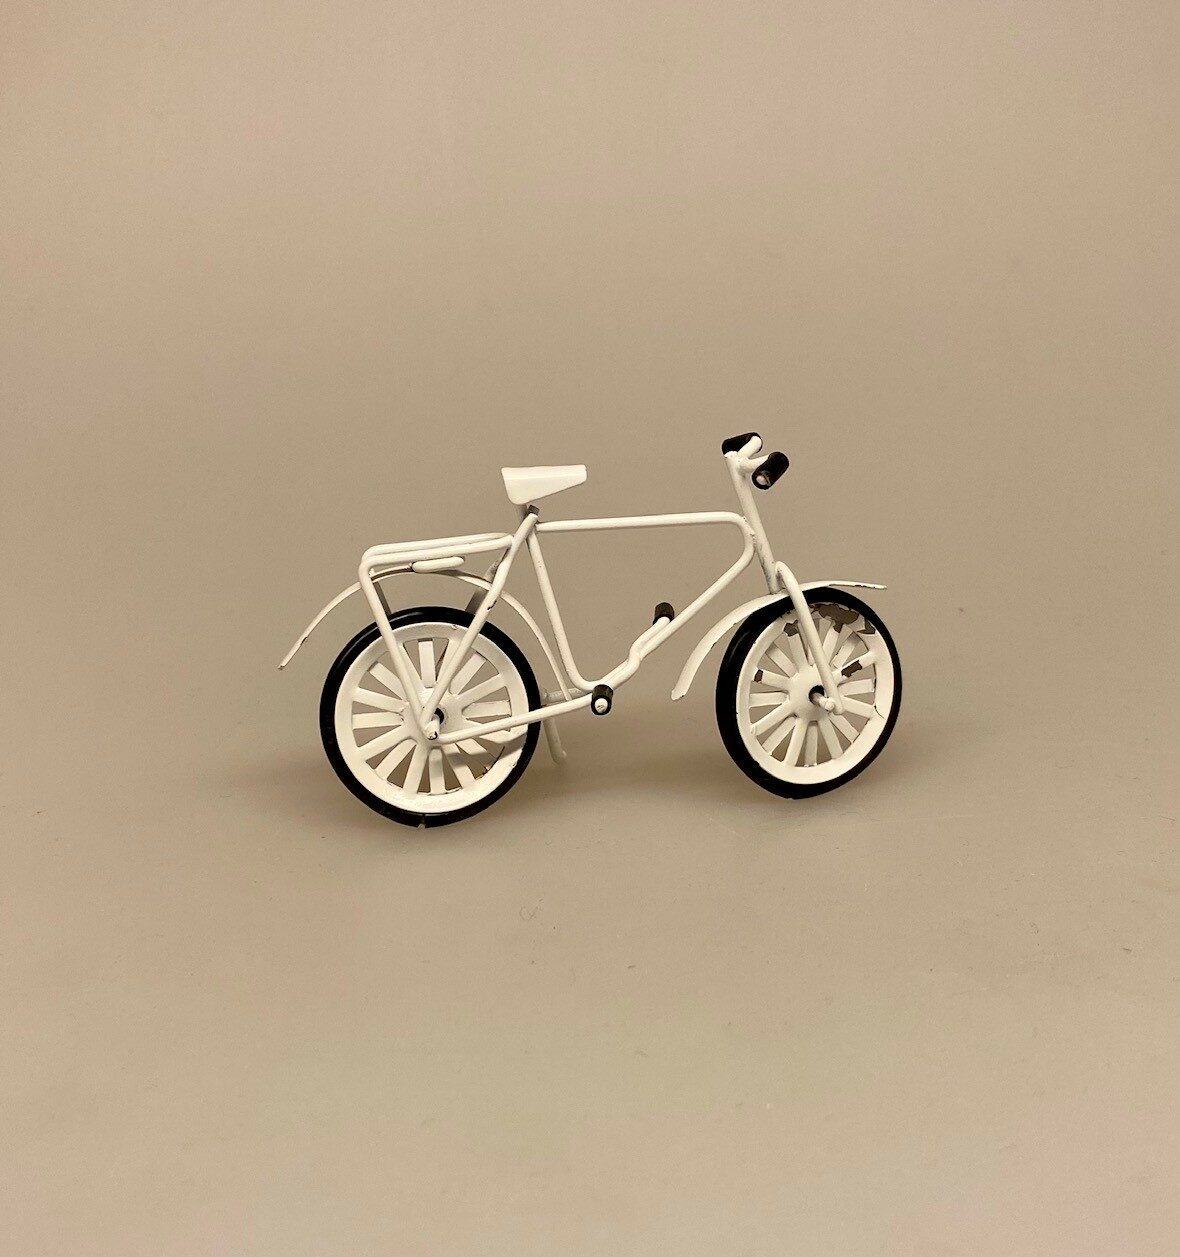 én af Hver - Miniature Børnecykel